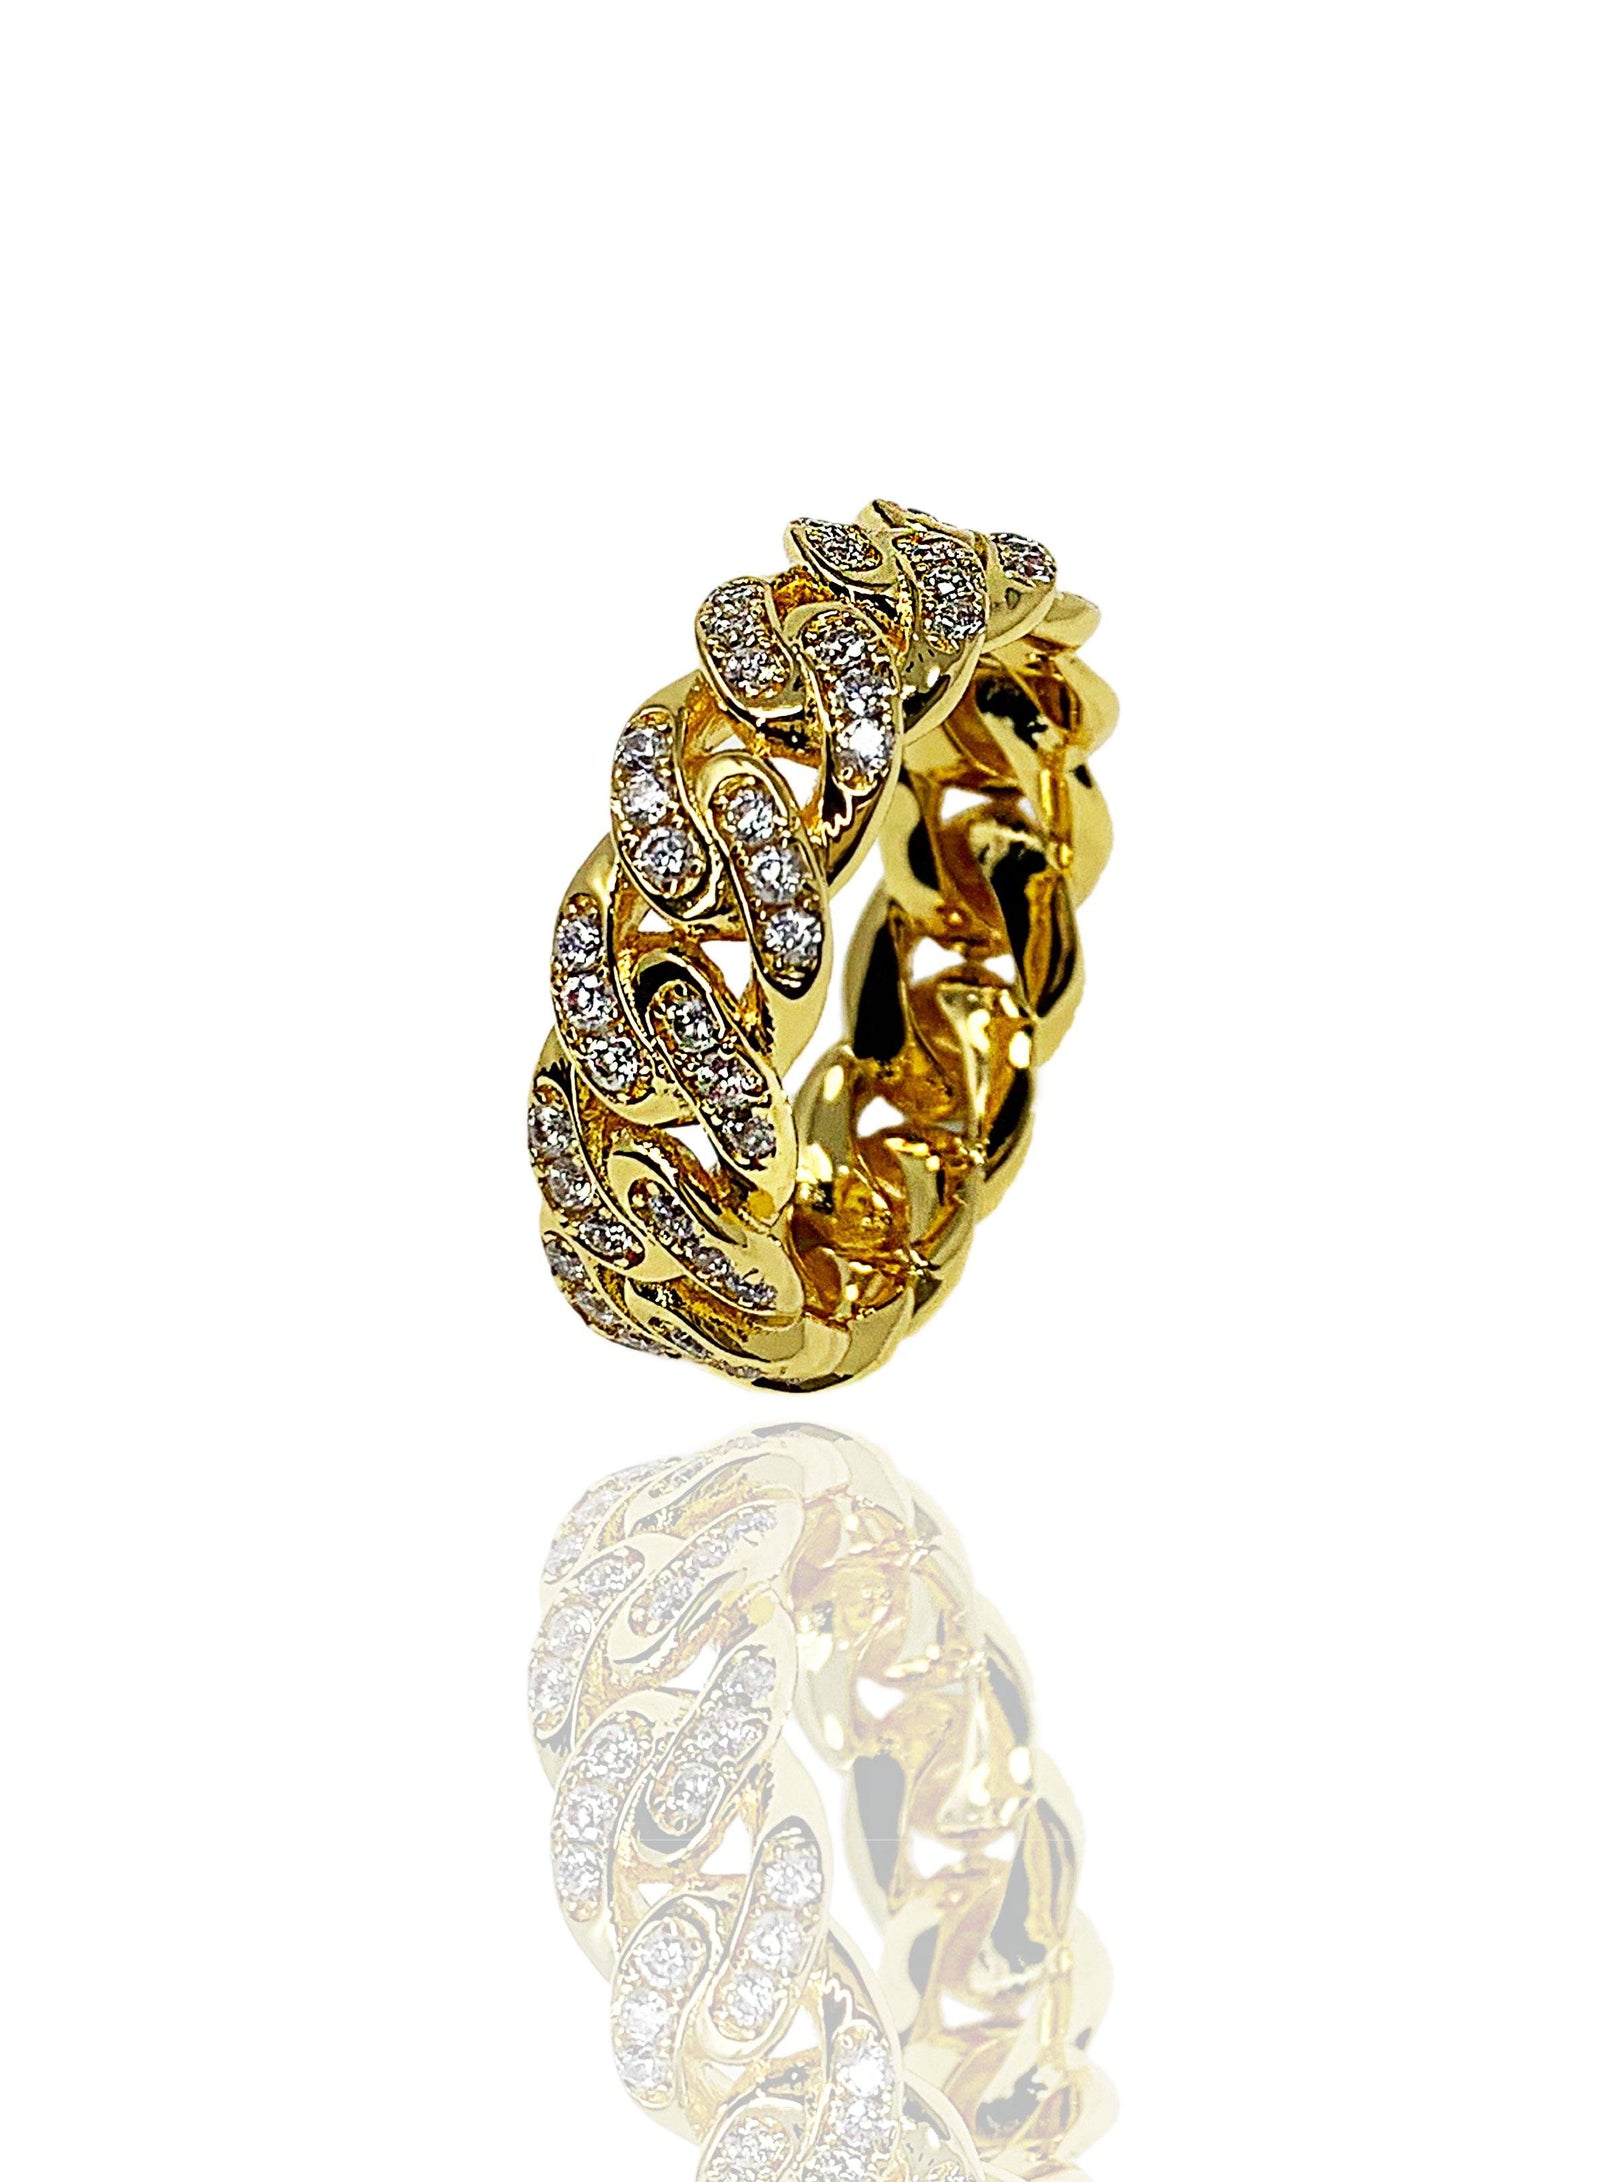 Buy Gemstone Engagement Rings Online at Best Price | GemPundit